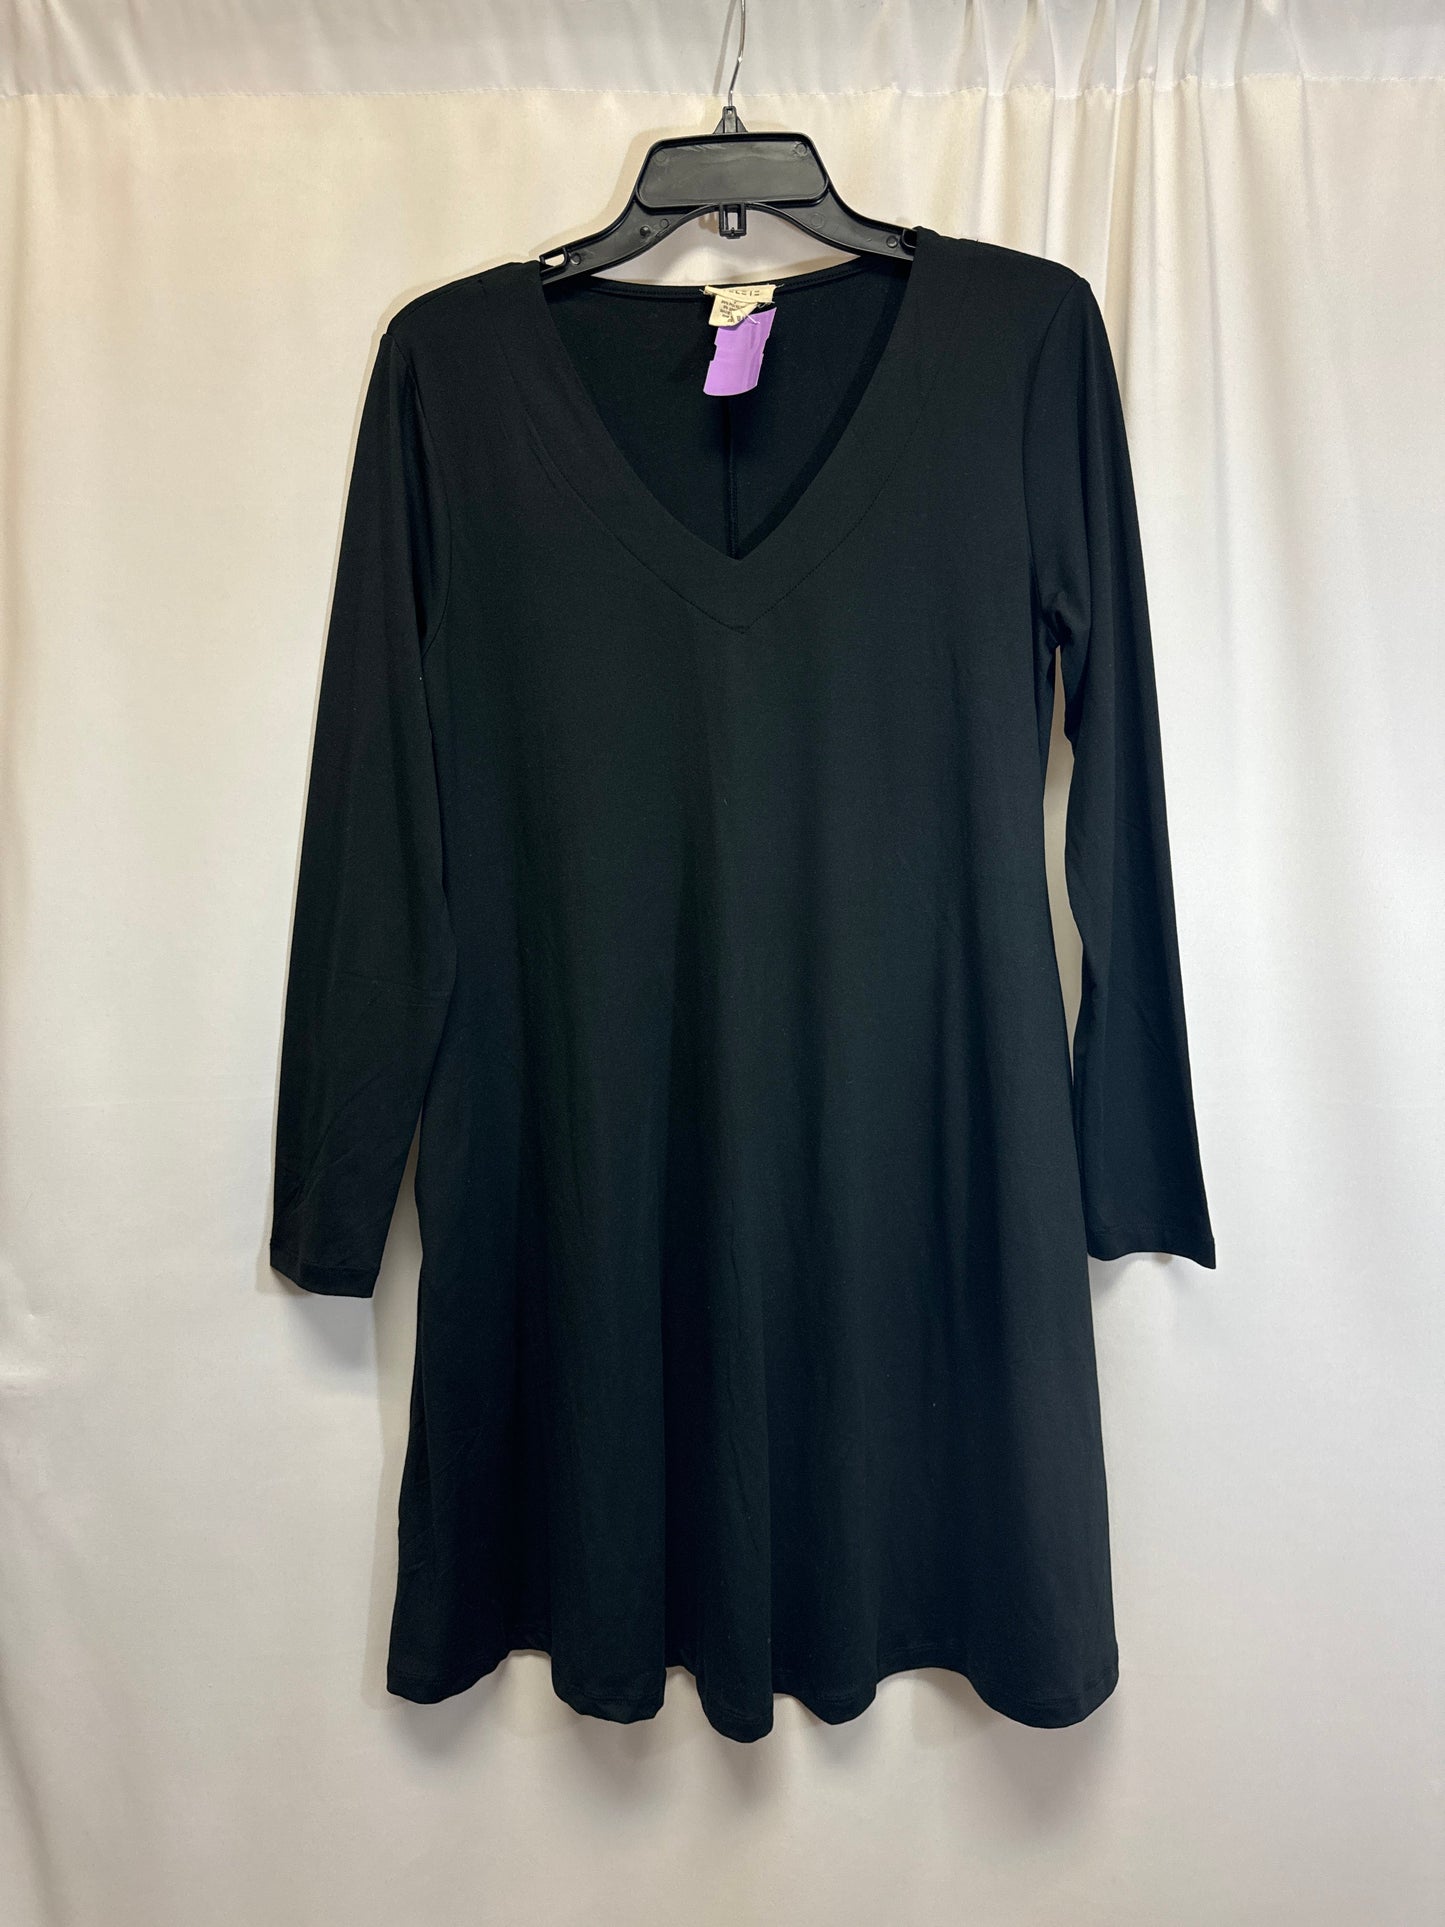 Black Dress Casual Midi Yelete, Size S